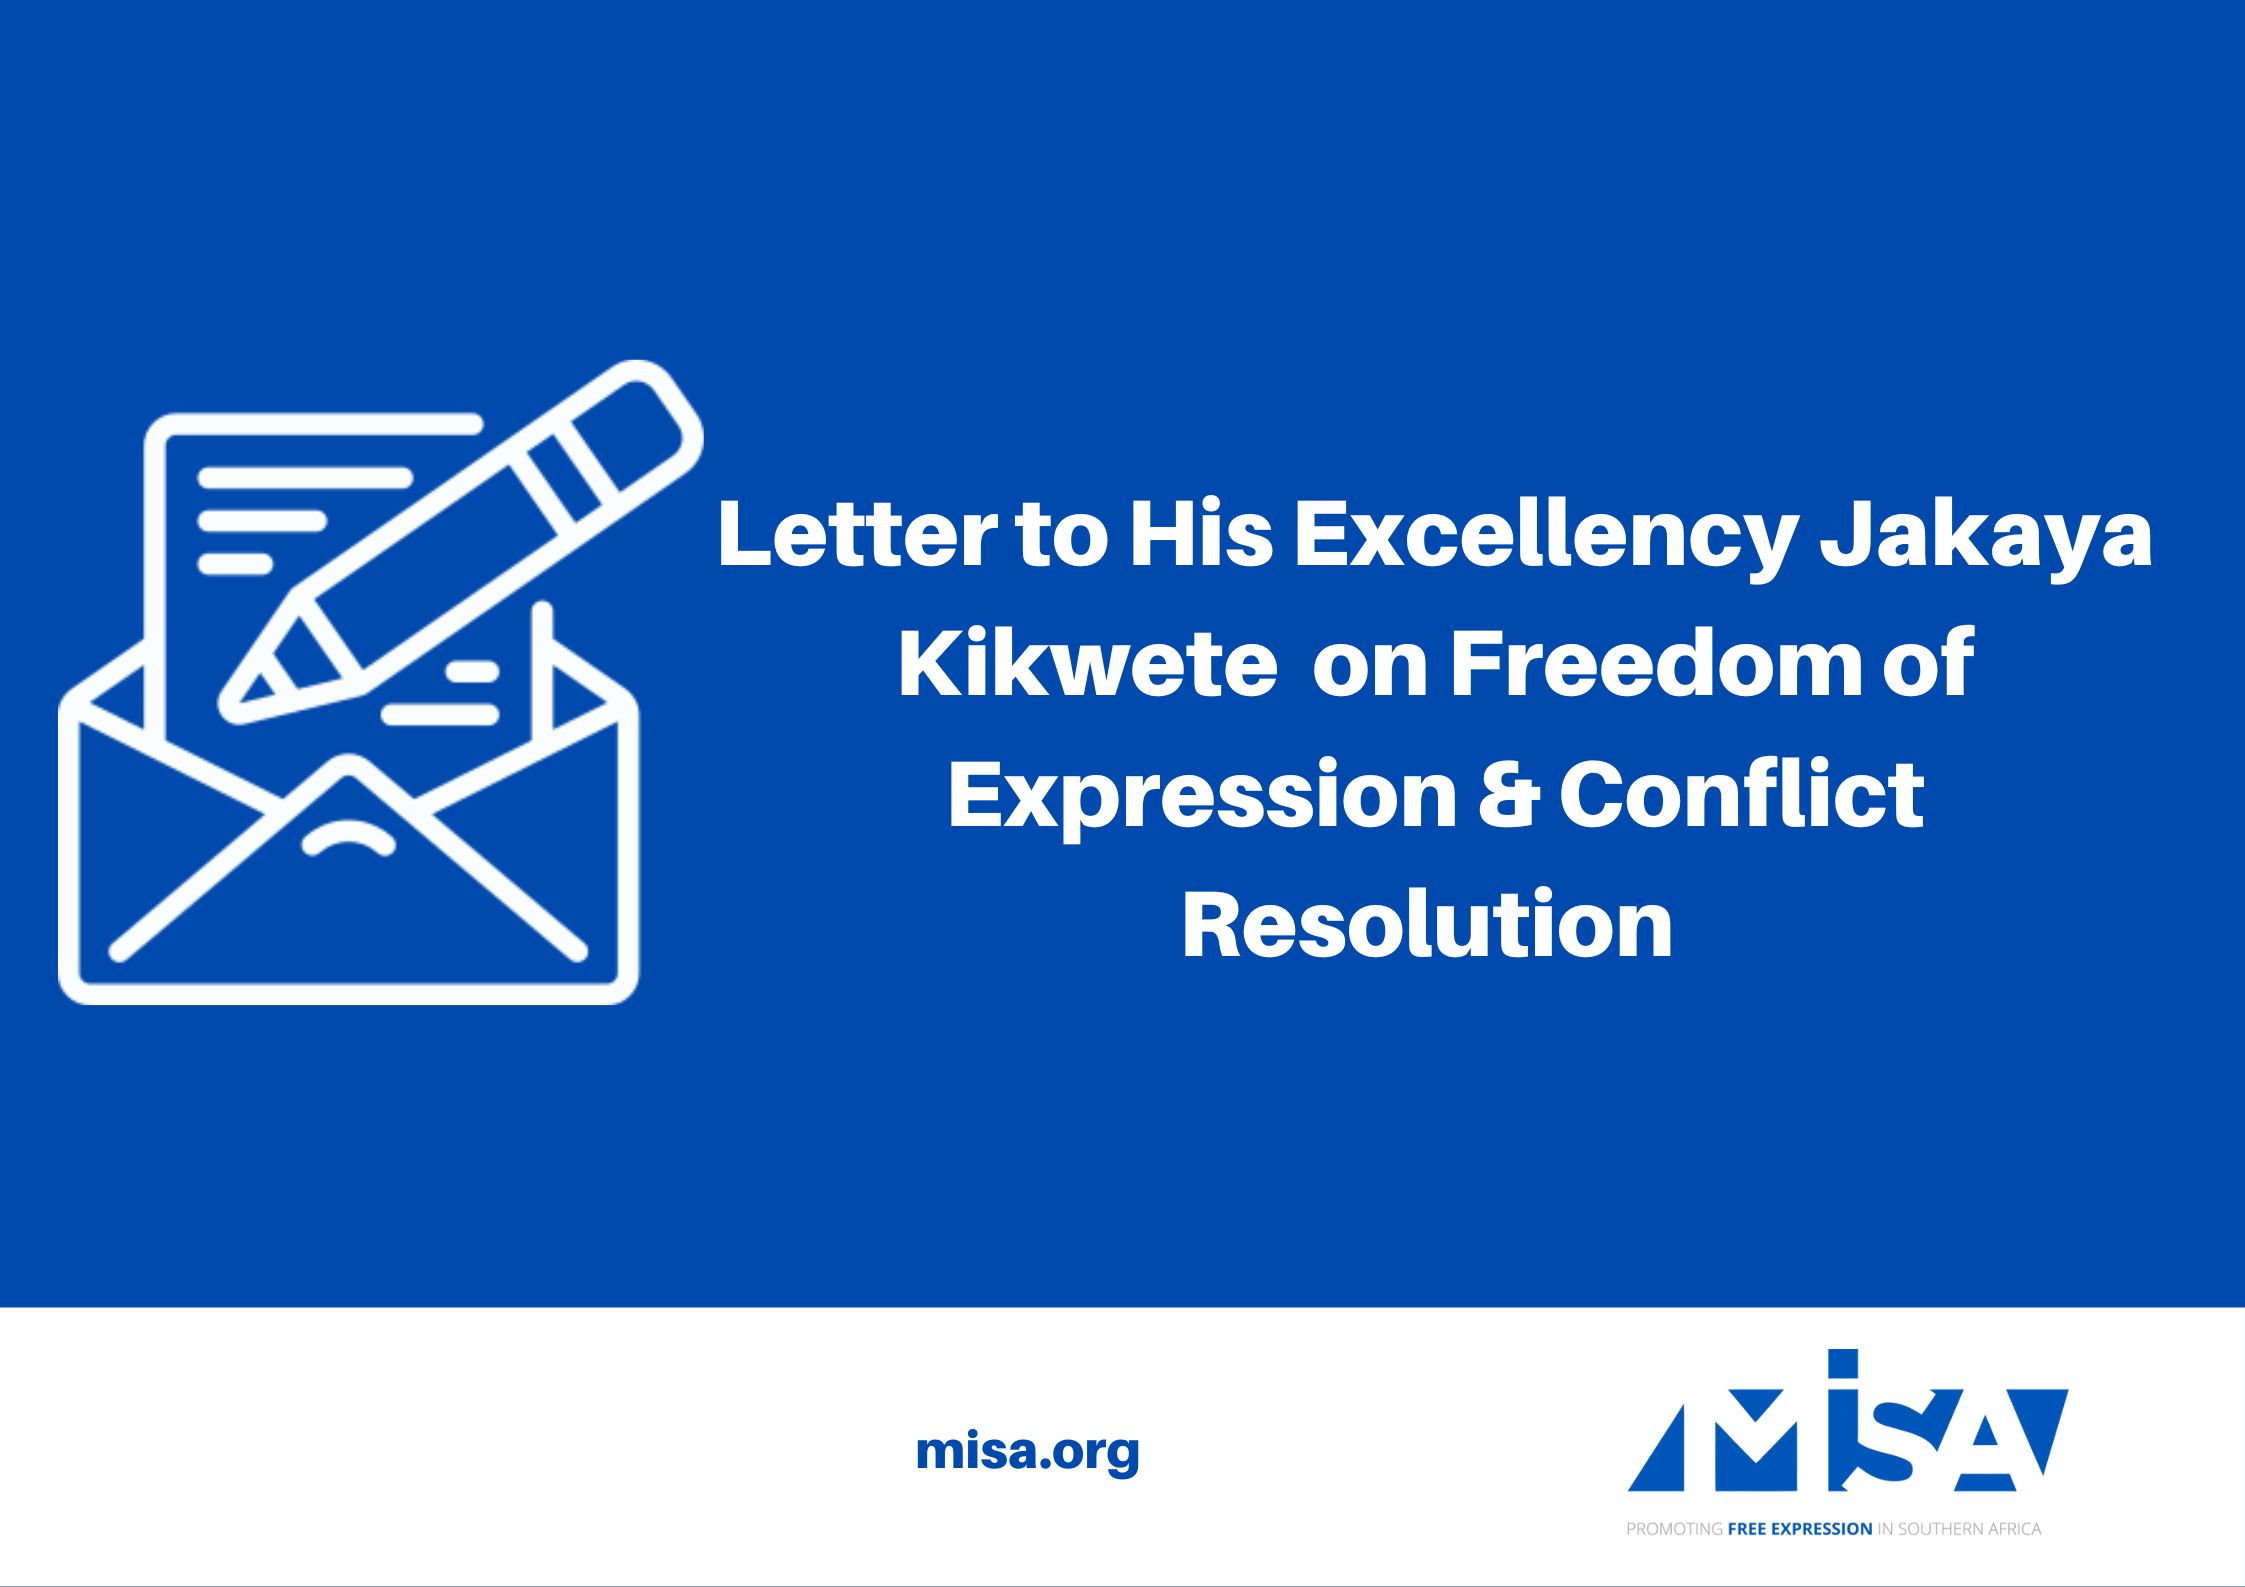 Letter to His Excellency Jakaya Kikwete